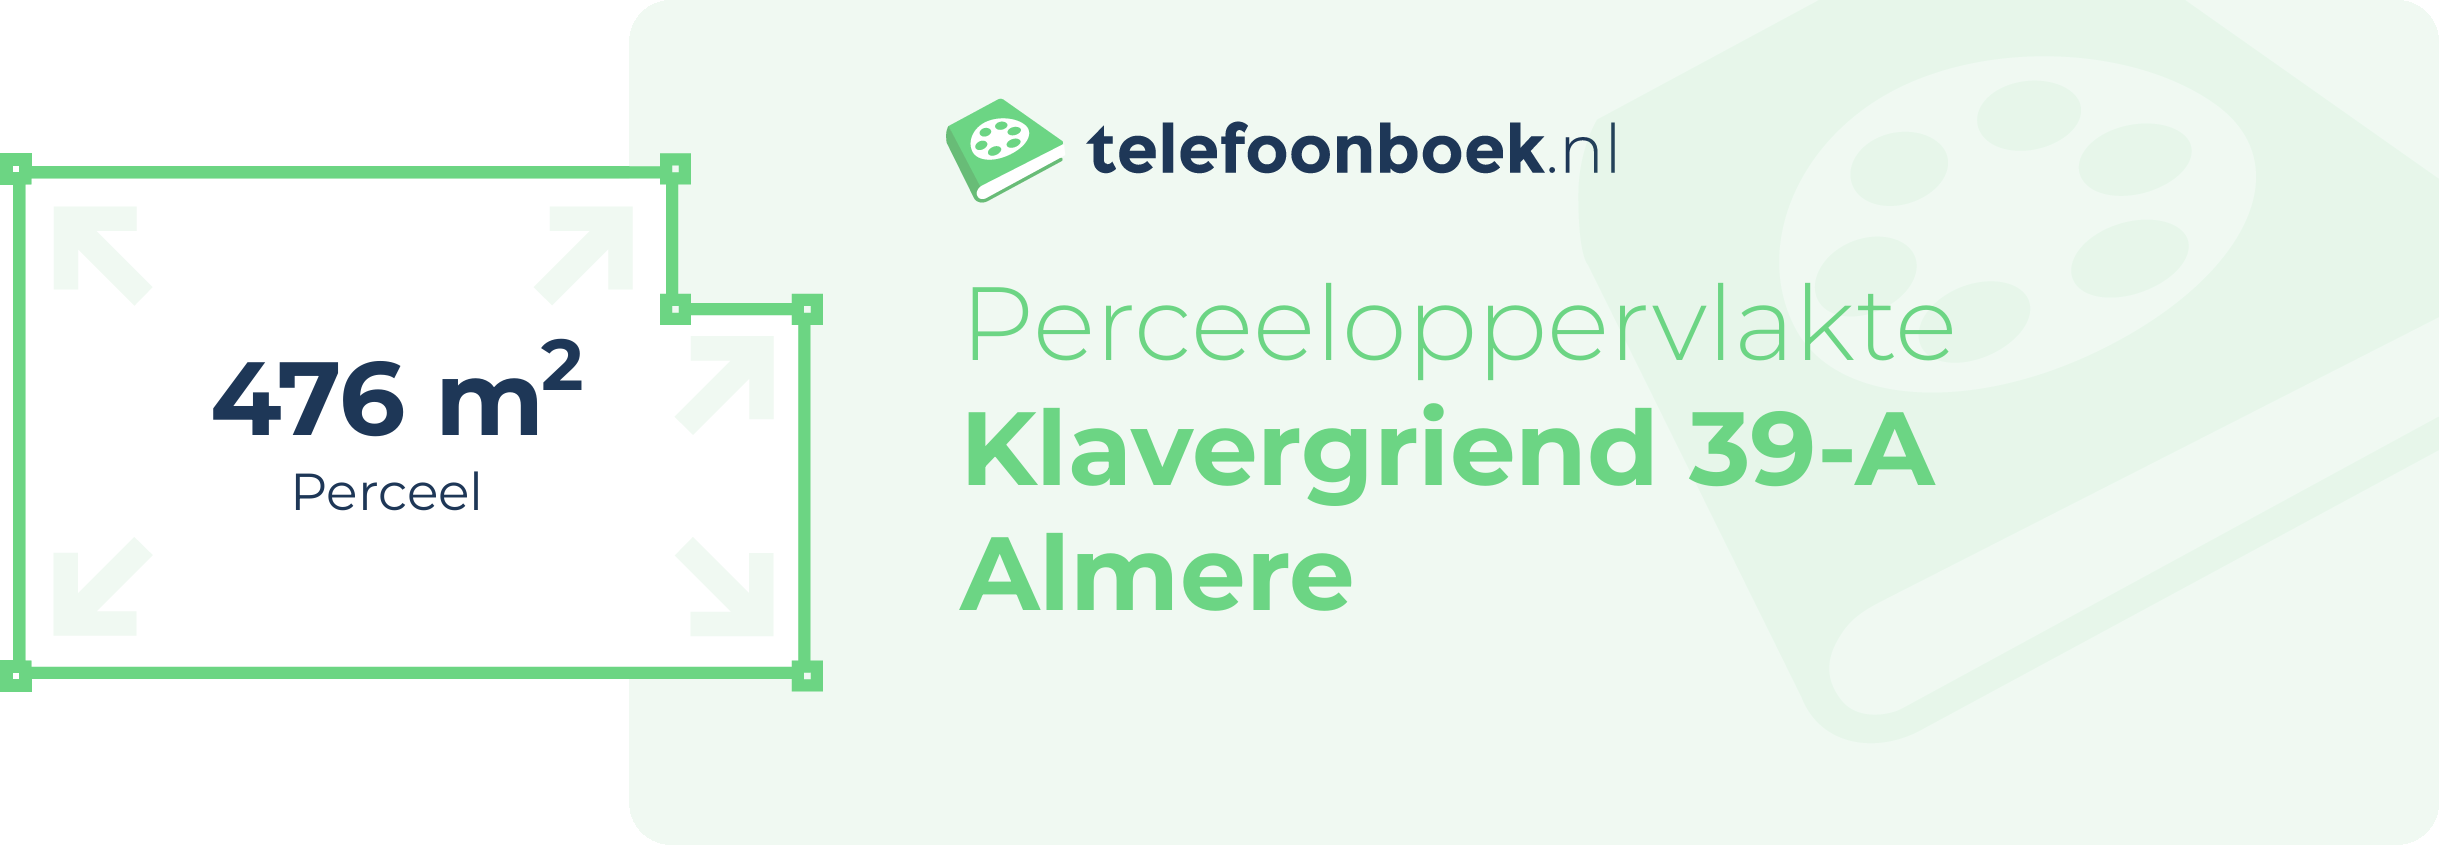 Perceeloppervlakte Klavergriend 39-A Almere